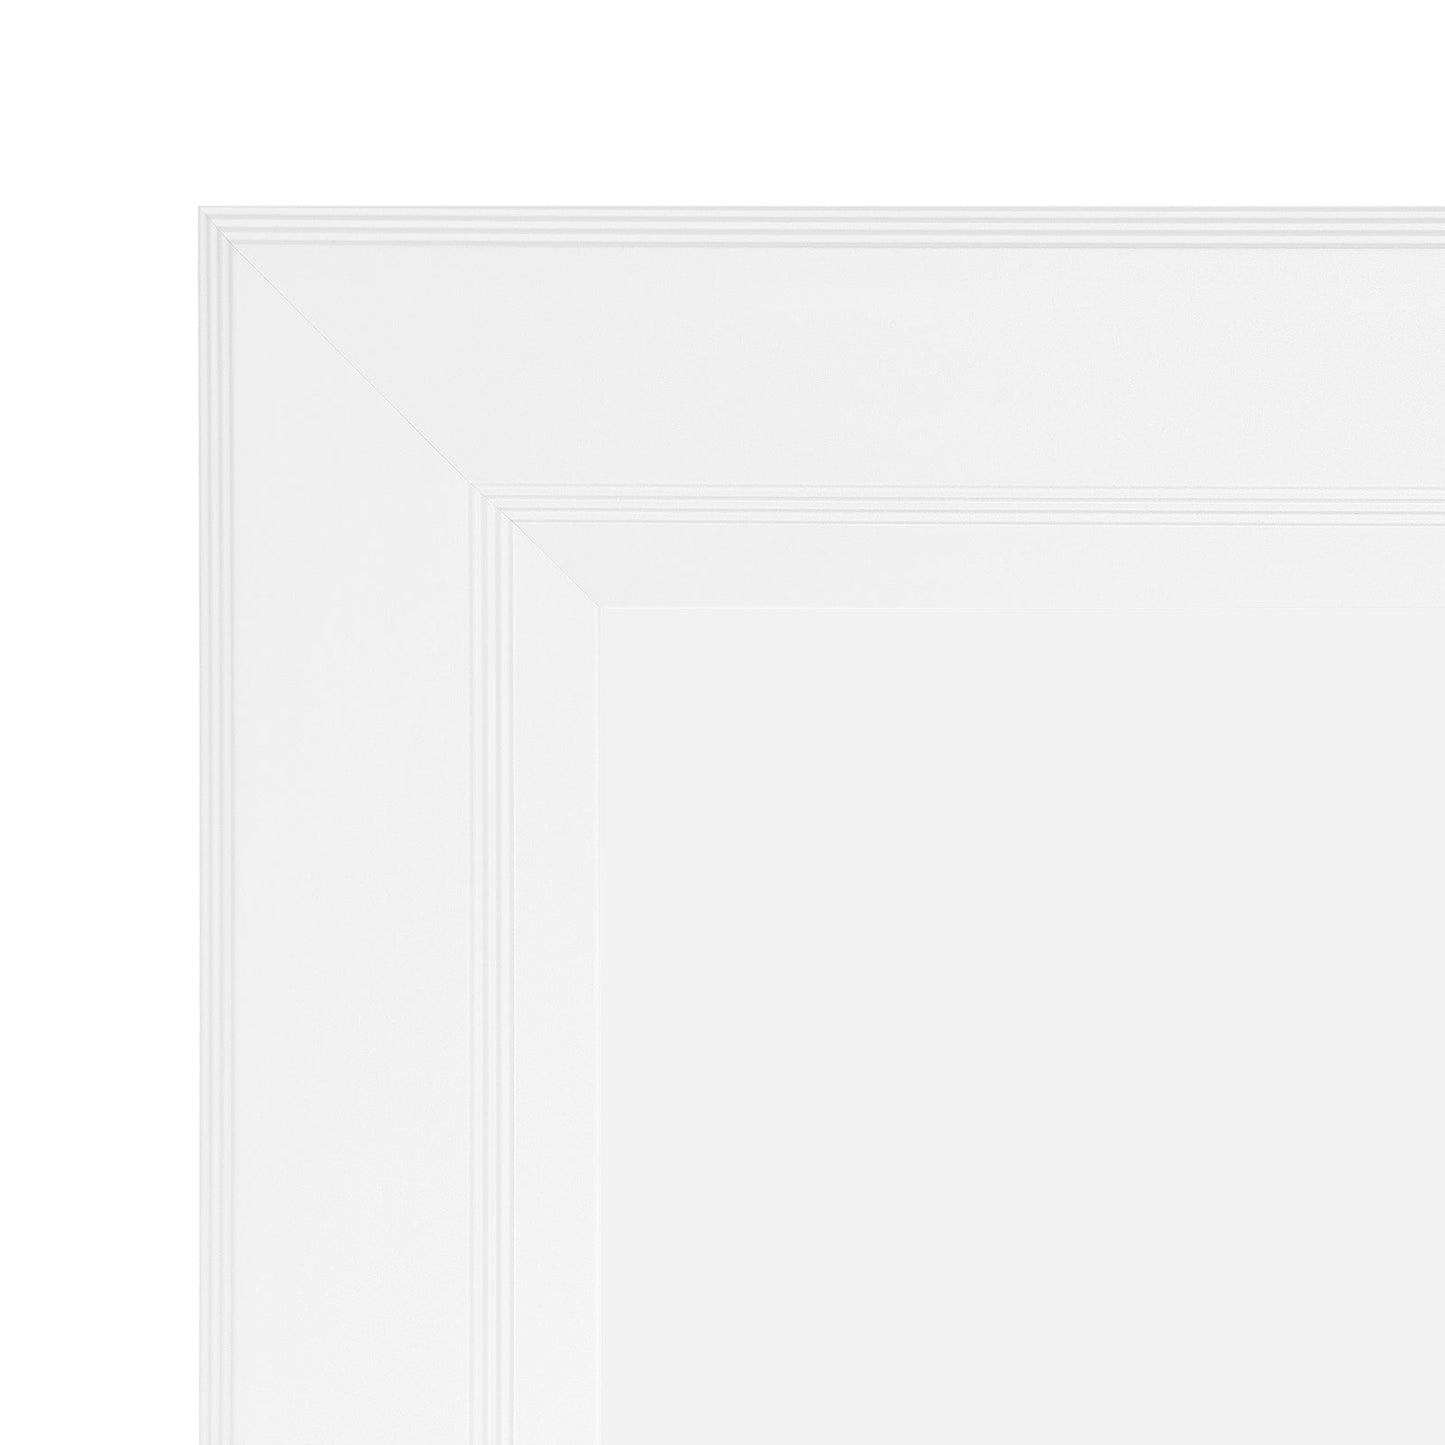 18x24 White SnapeZo® Poster Case - 1.77" Profile - Snap Frames Direct